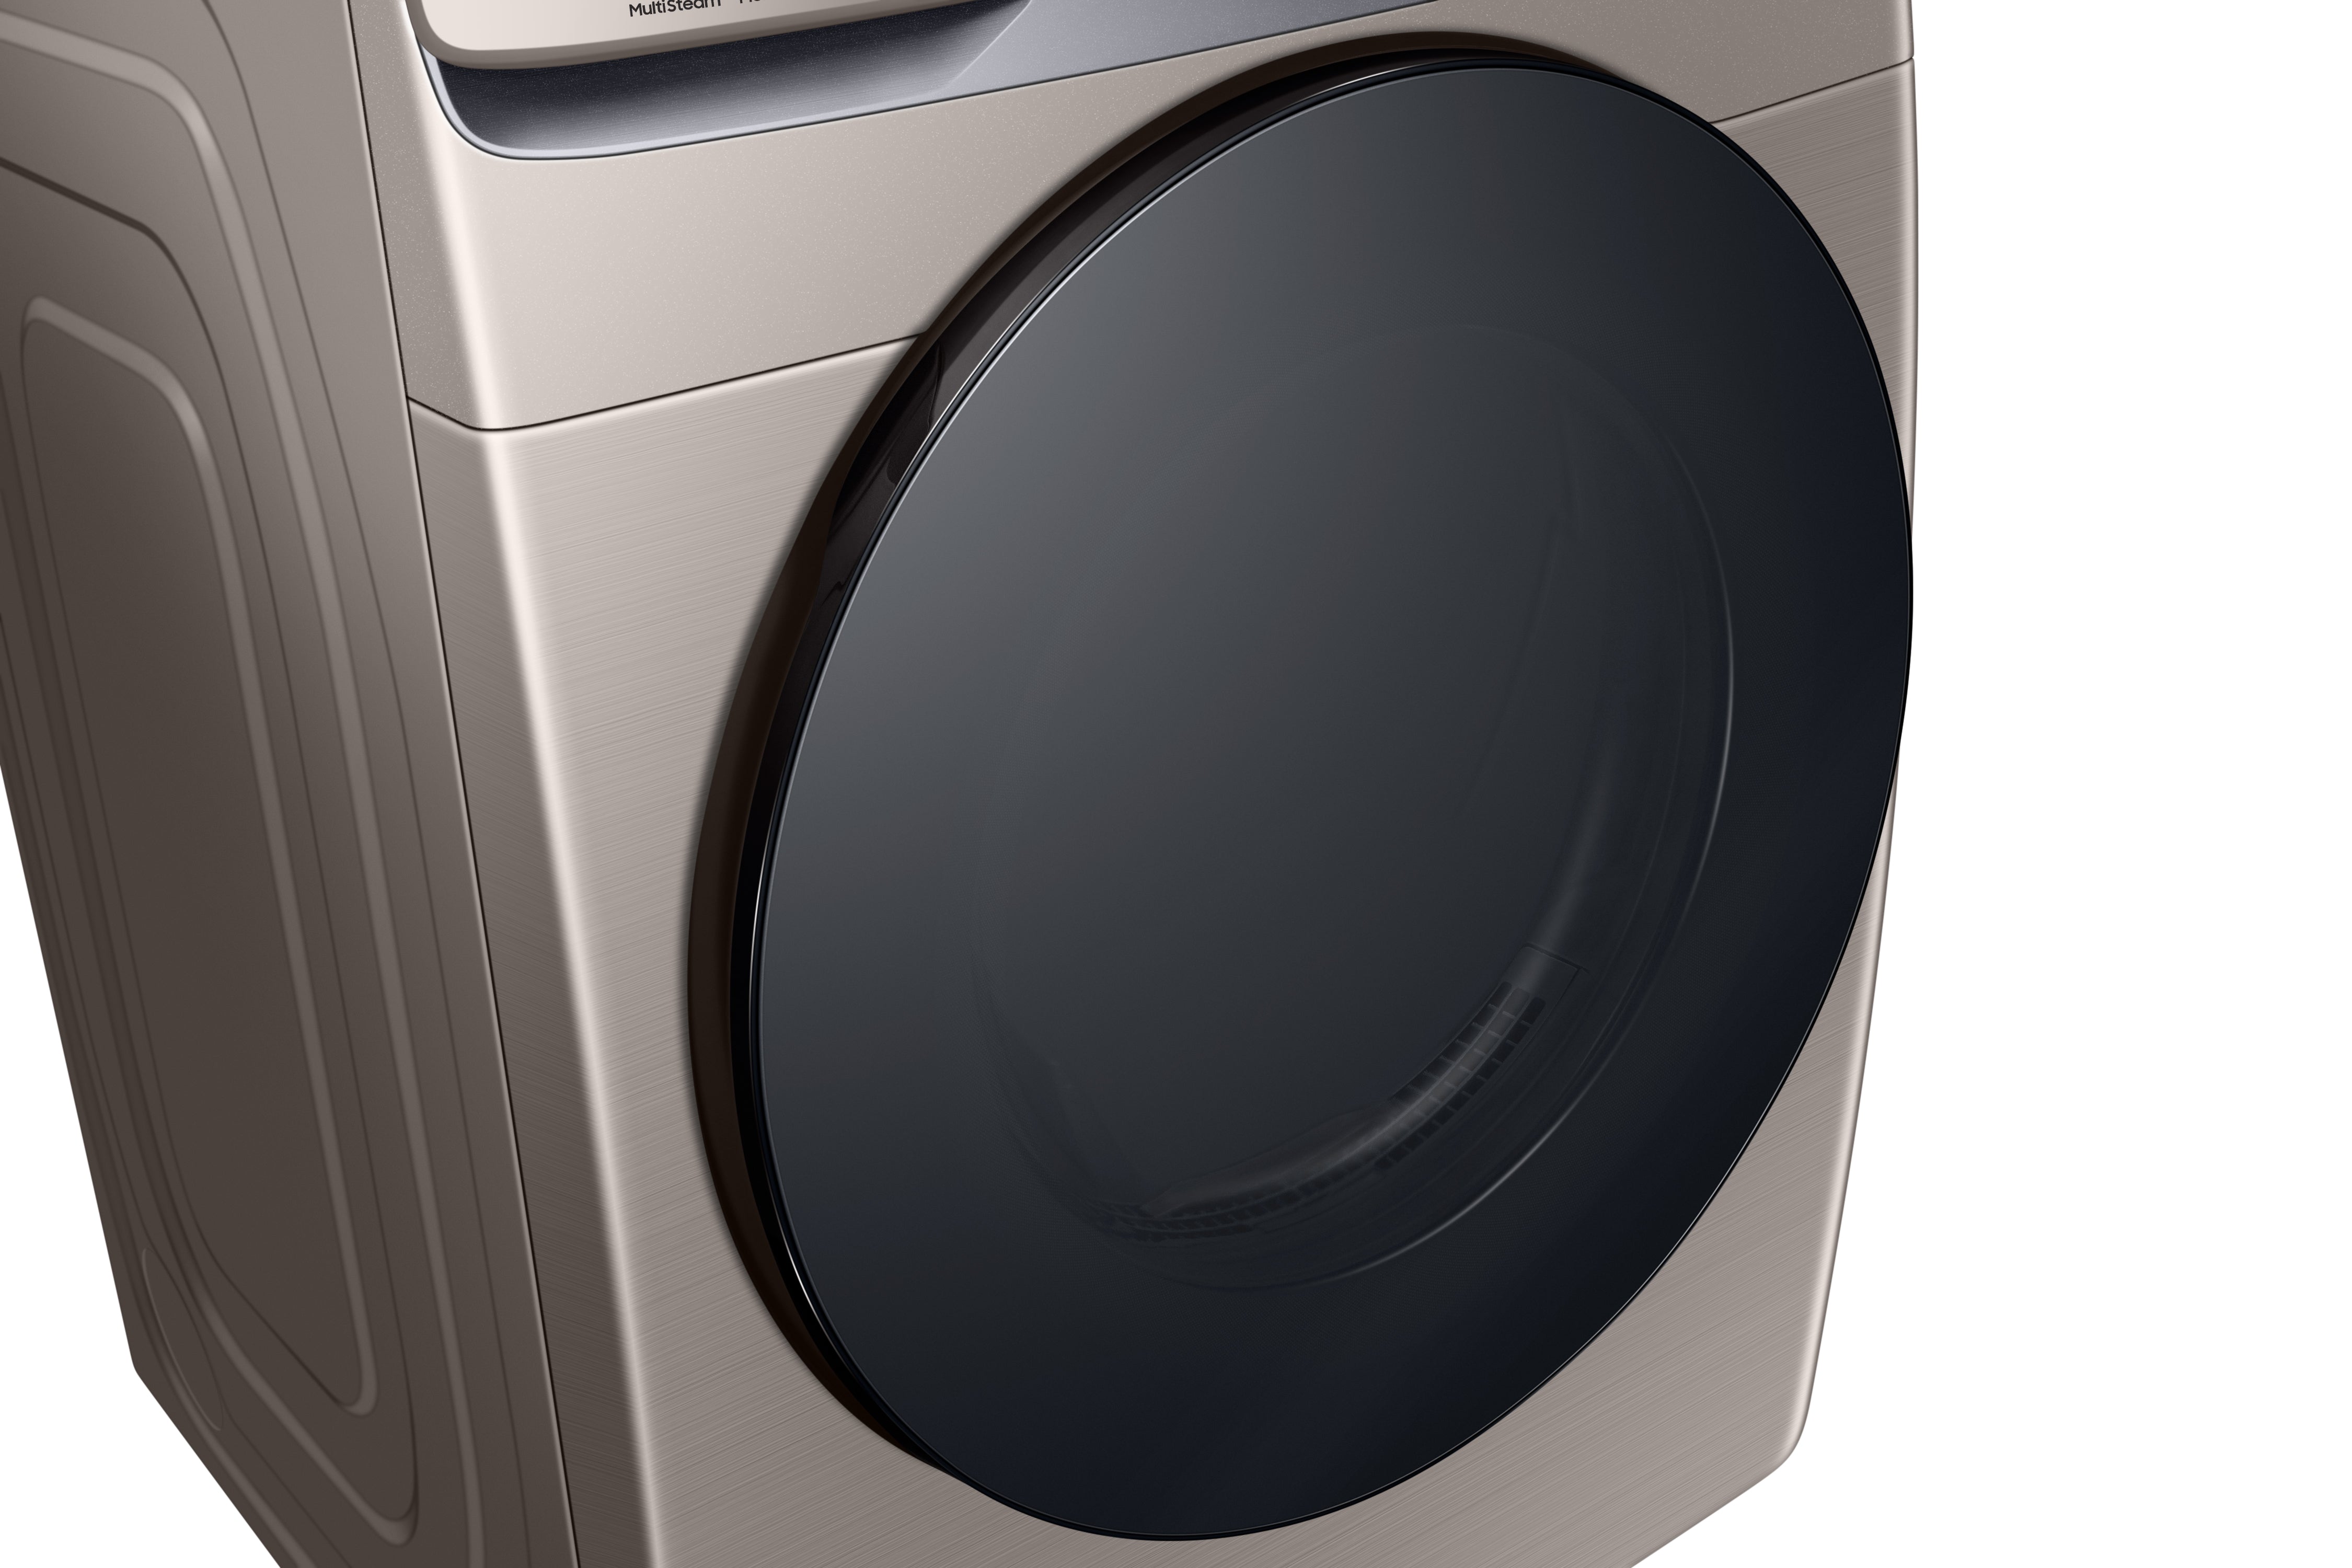 Samsung - 7.5 cu. Ft  Electric Dryer in Champagne - DVE45B6305C